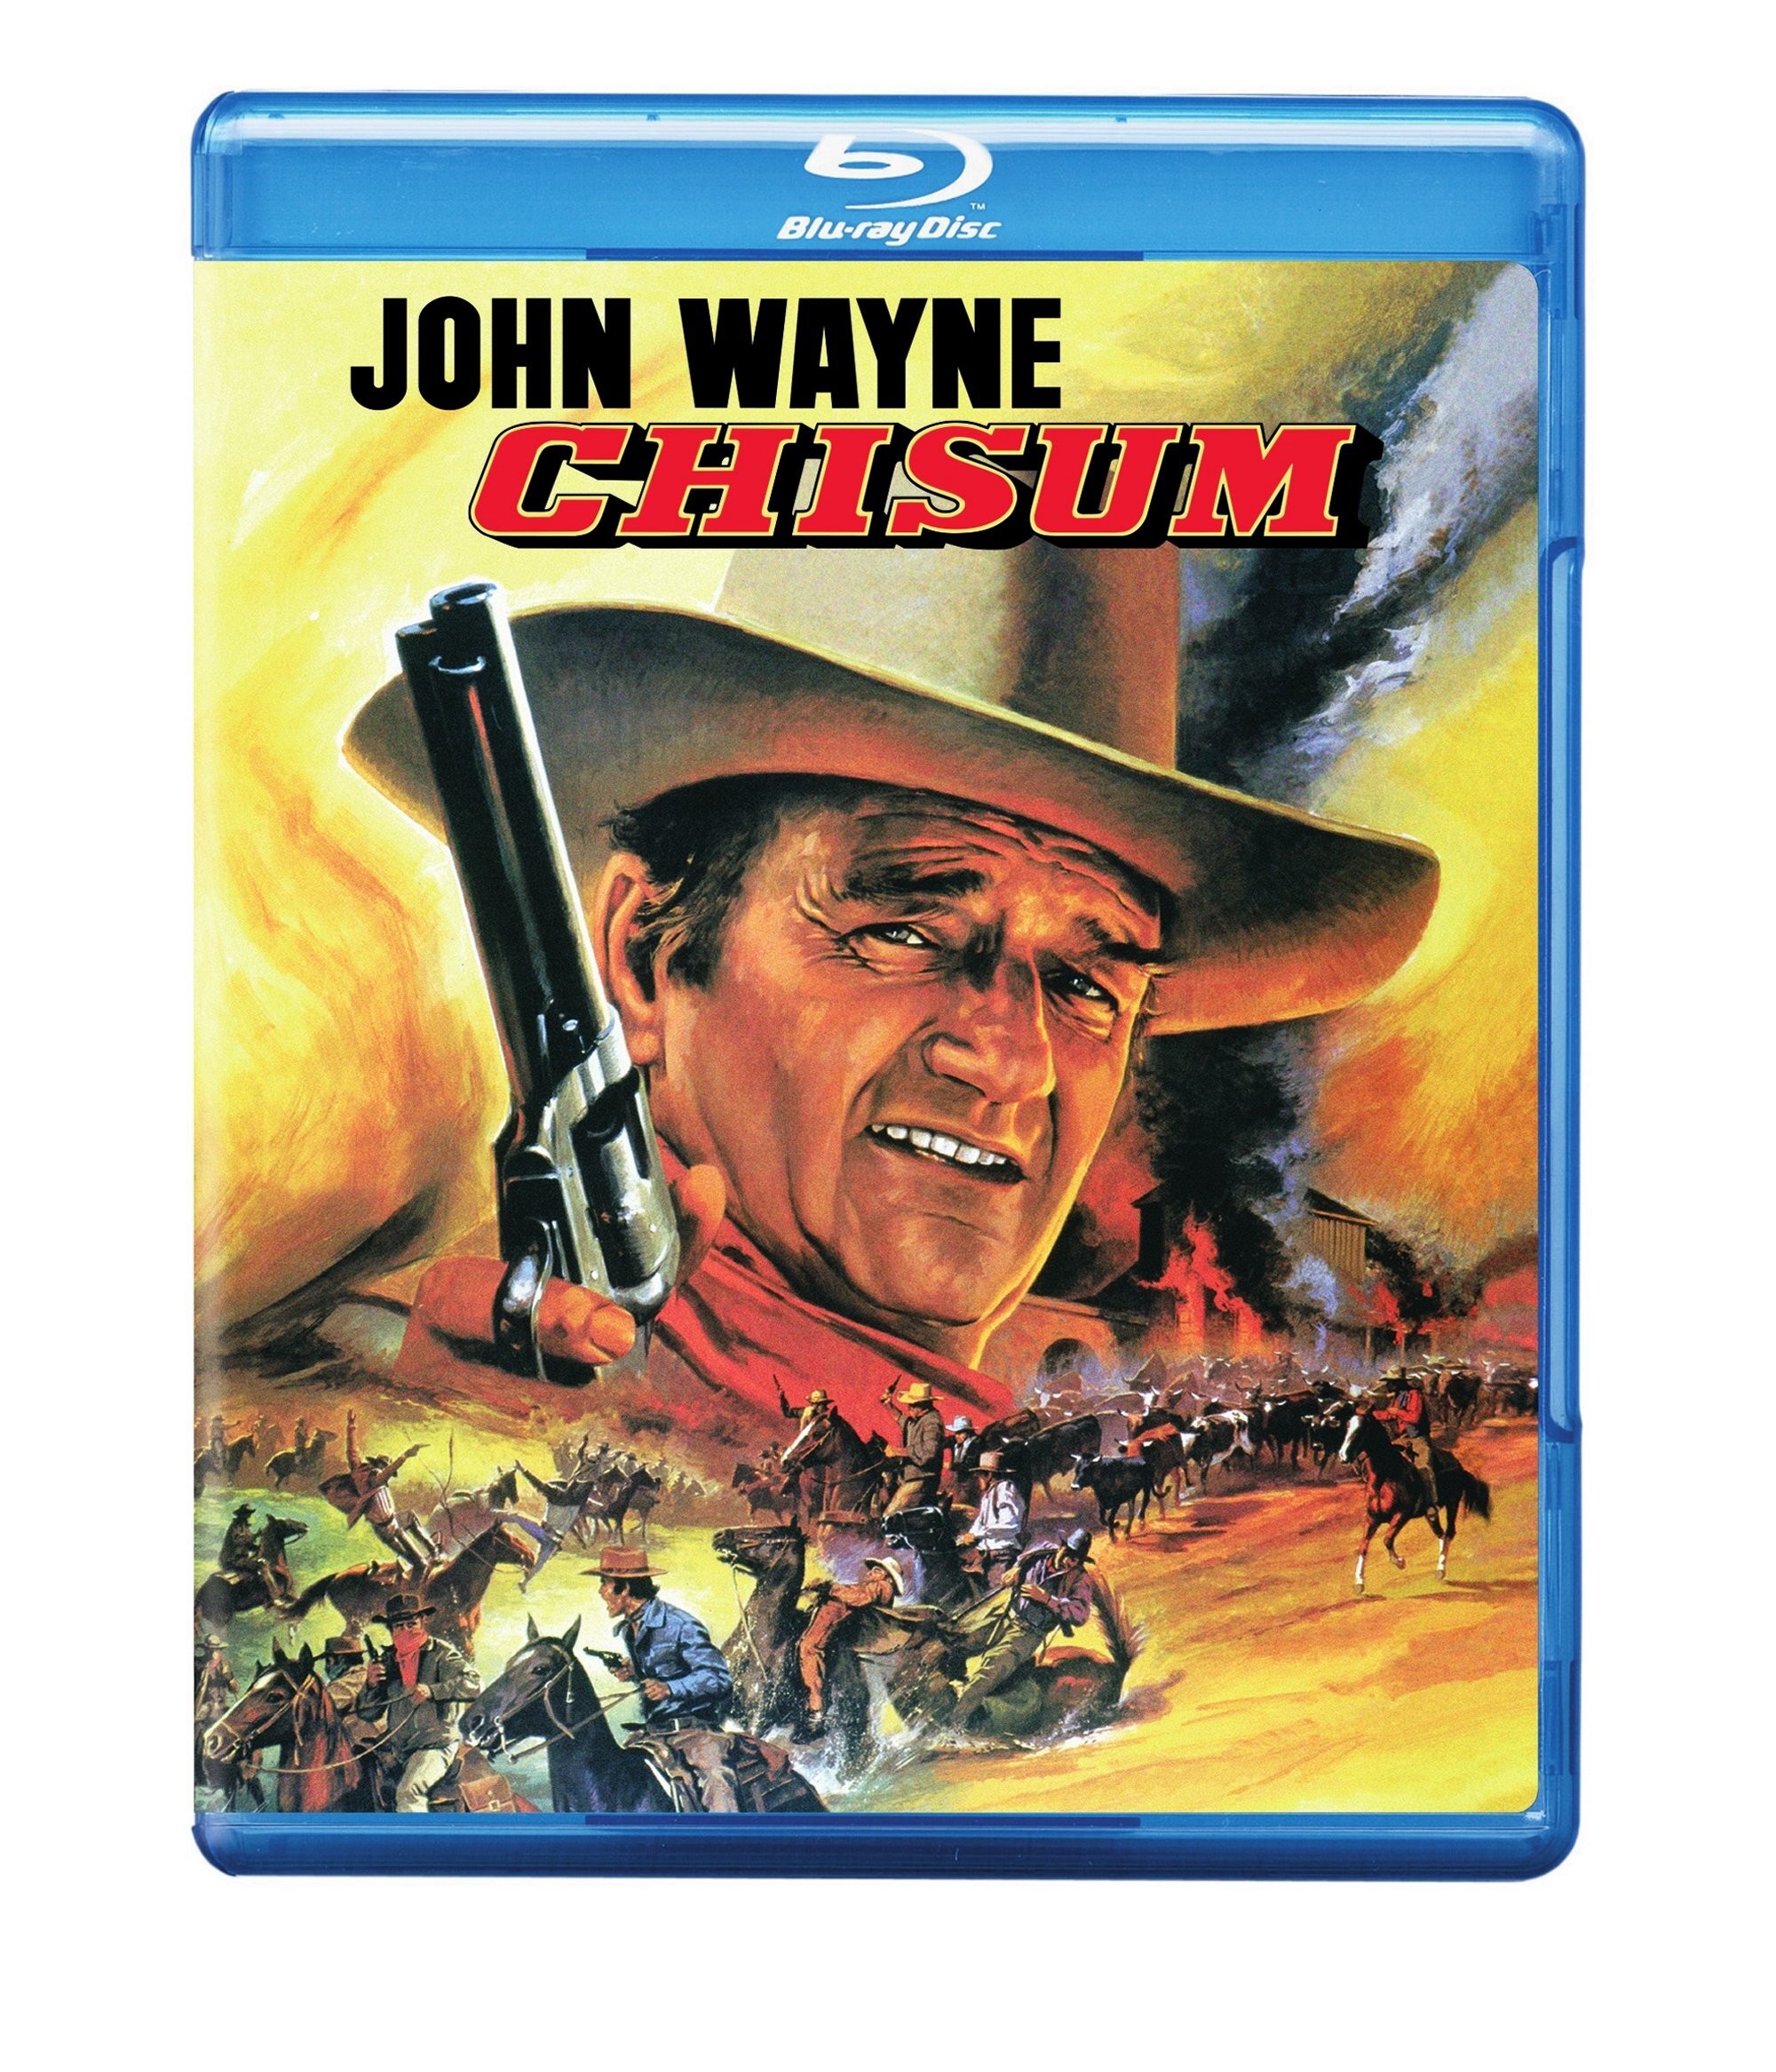 Chisum - Blu-ray [ 1970 ]  - Western Movies On Blu-ray - Movies On GRUV